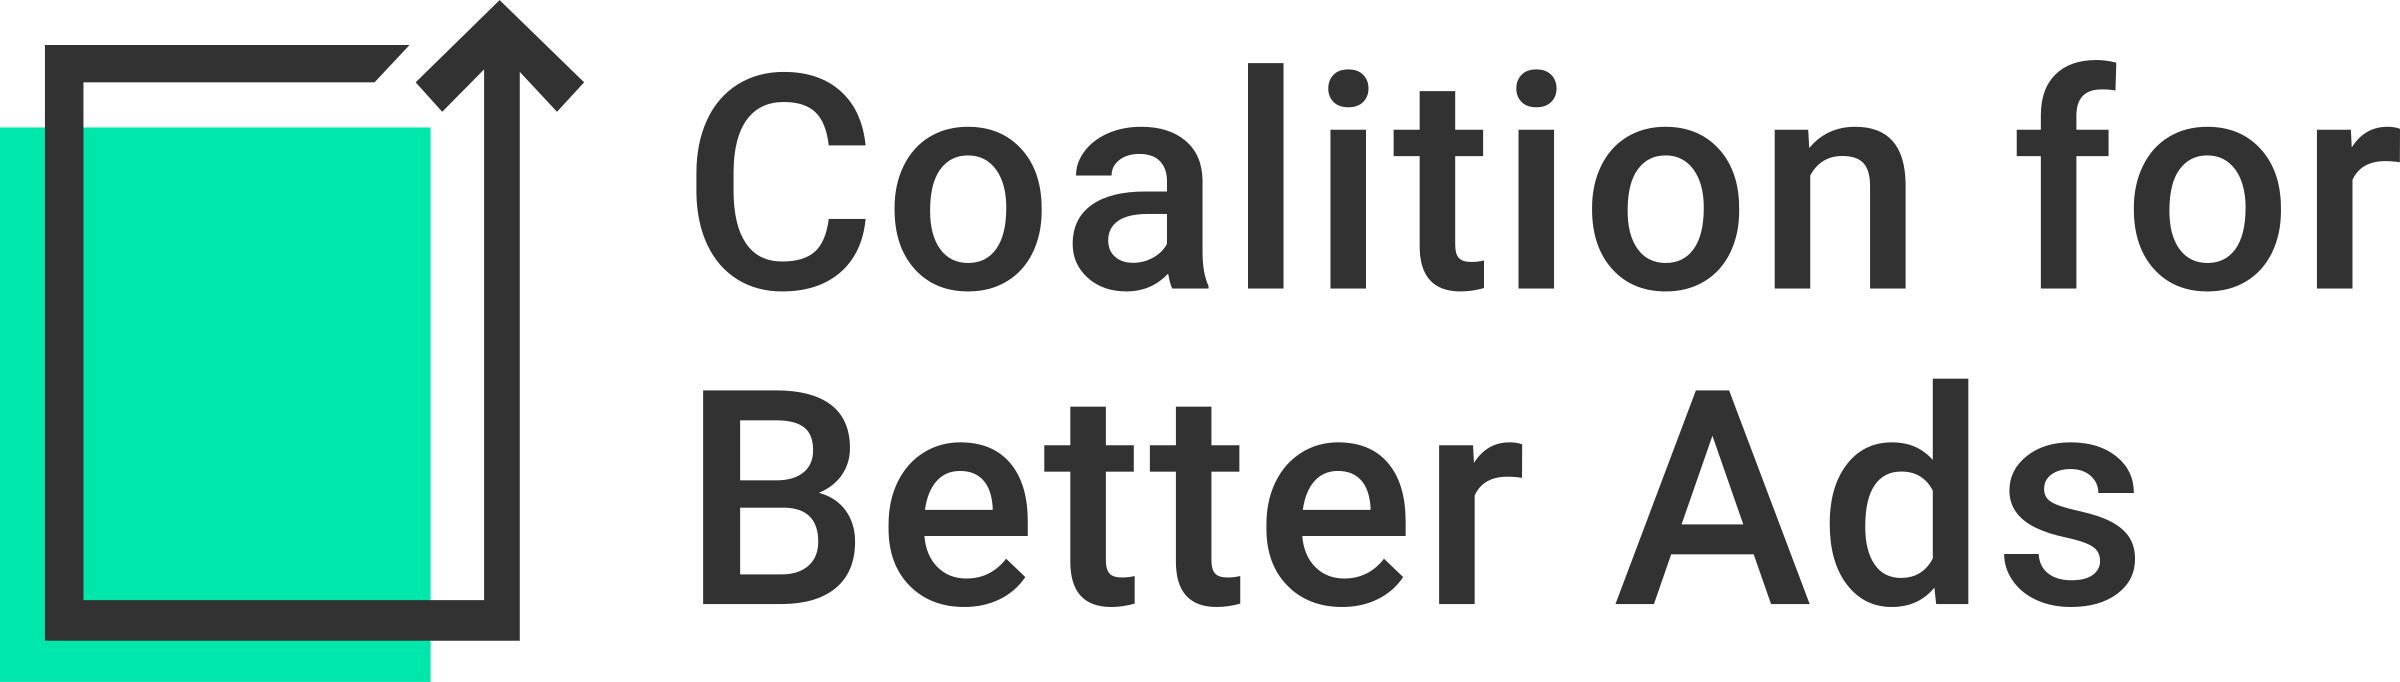 Coalition For Better Ads Logo Png Transparent - Coalition For Better Ads Clipart (2400x682), Png Download